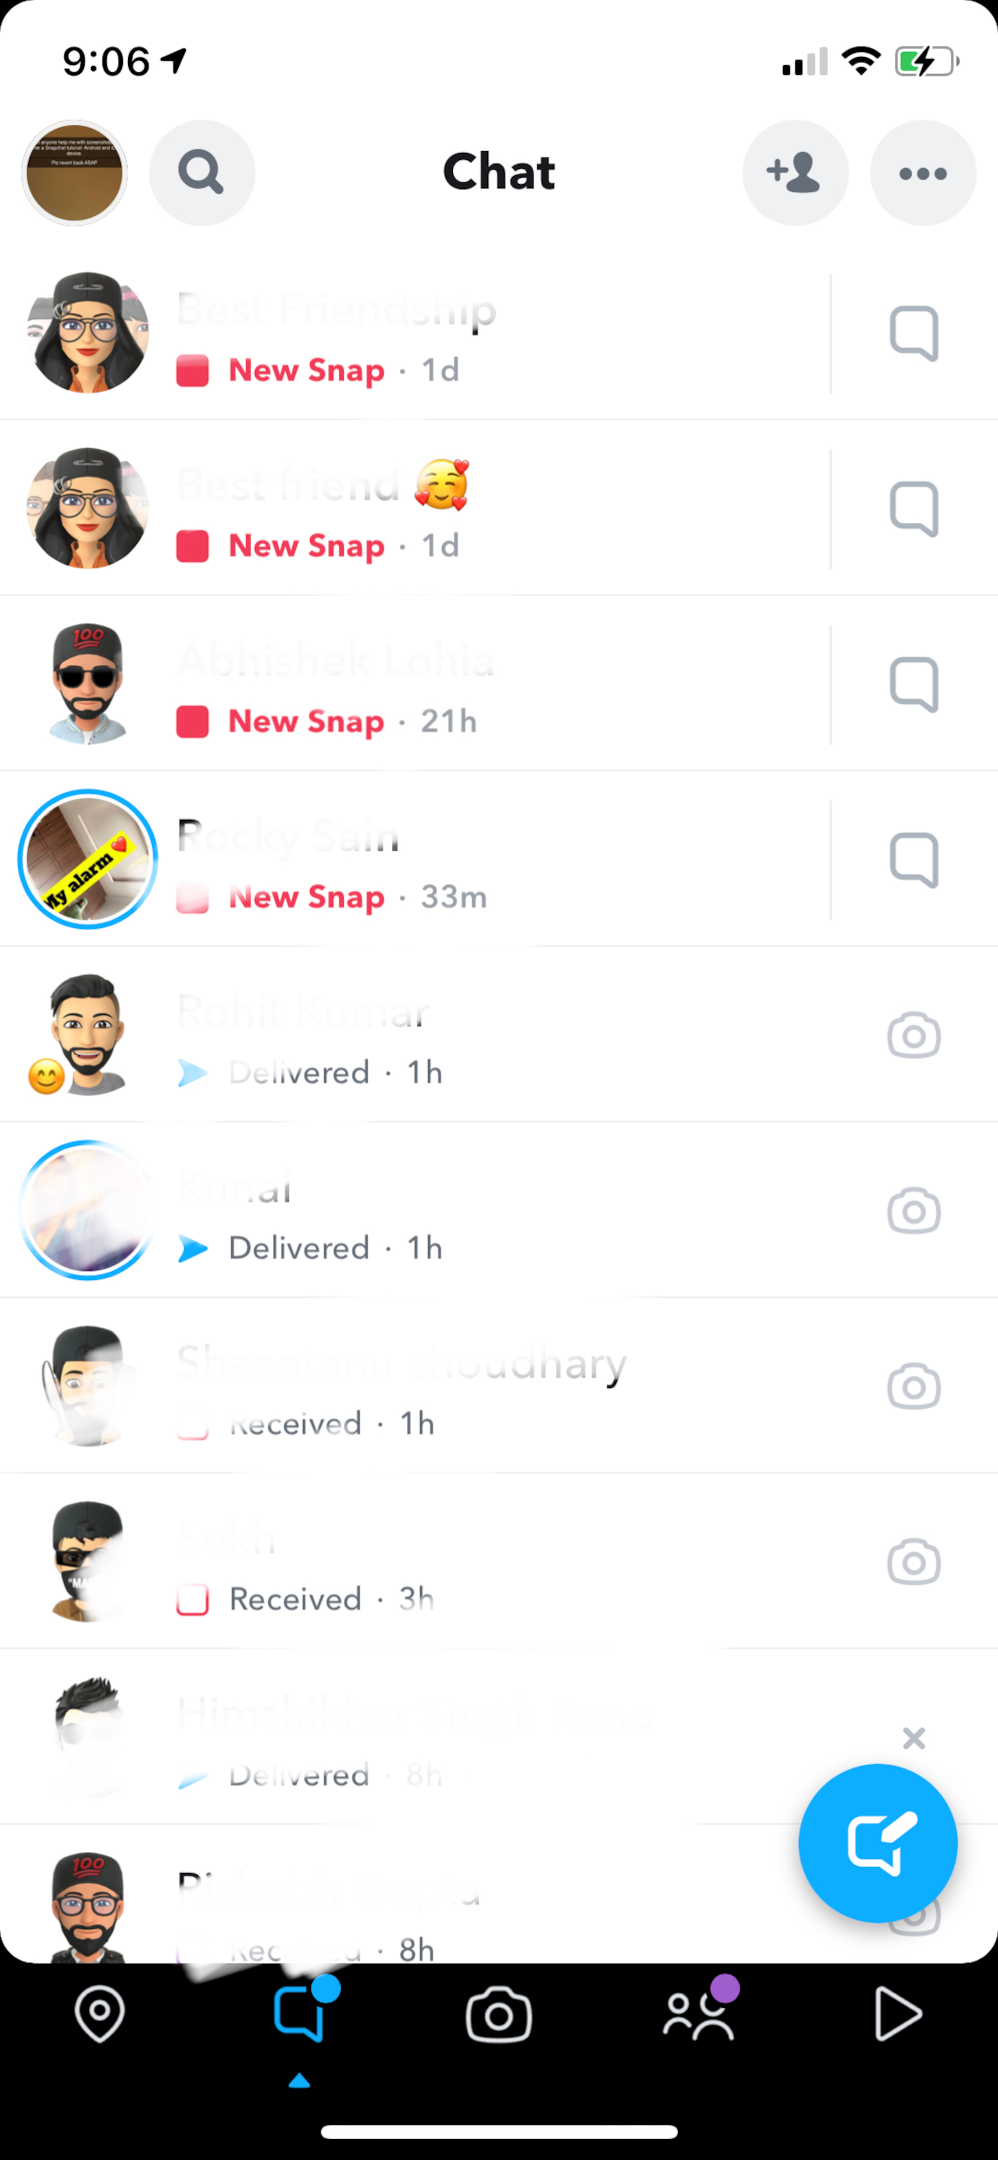 Screenshot of all the conversations of friends